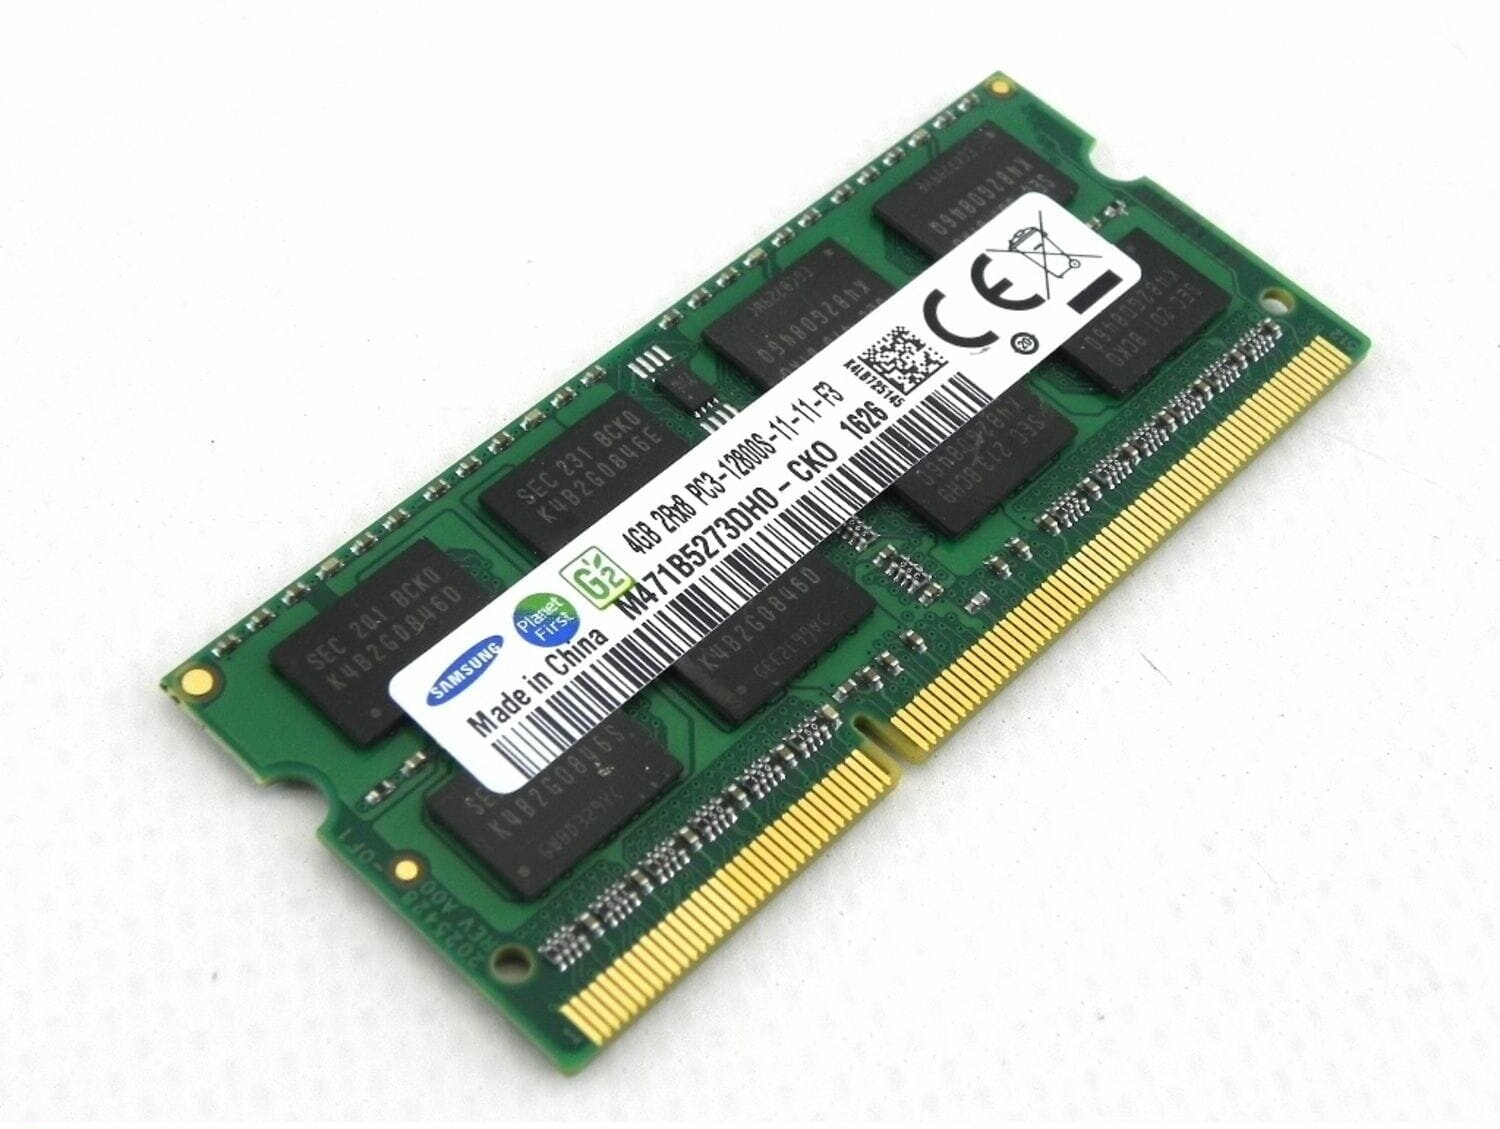 Оперативная память Samsung 4 ГБ PC3 (DDR3) 1600 МГц SODIMM 1,5v